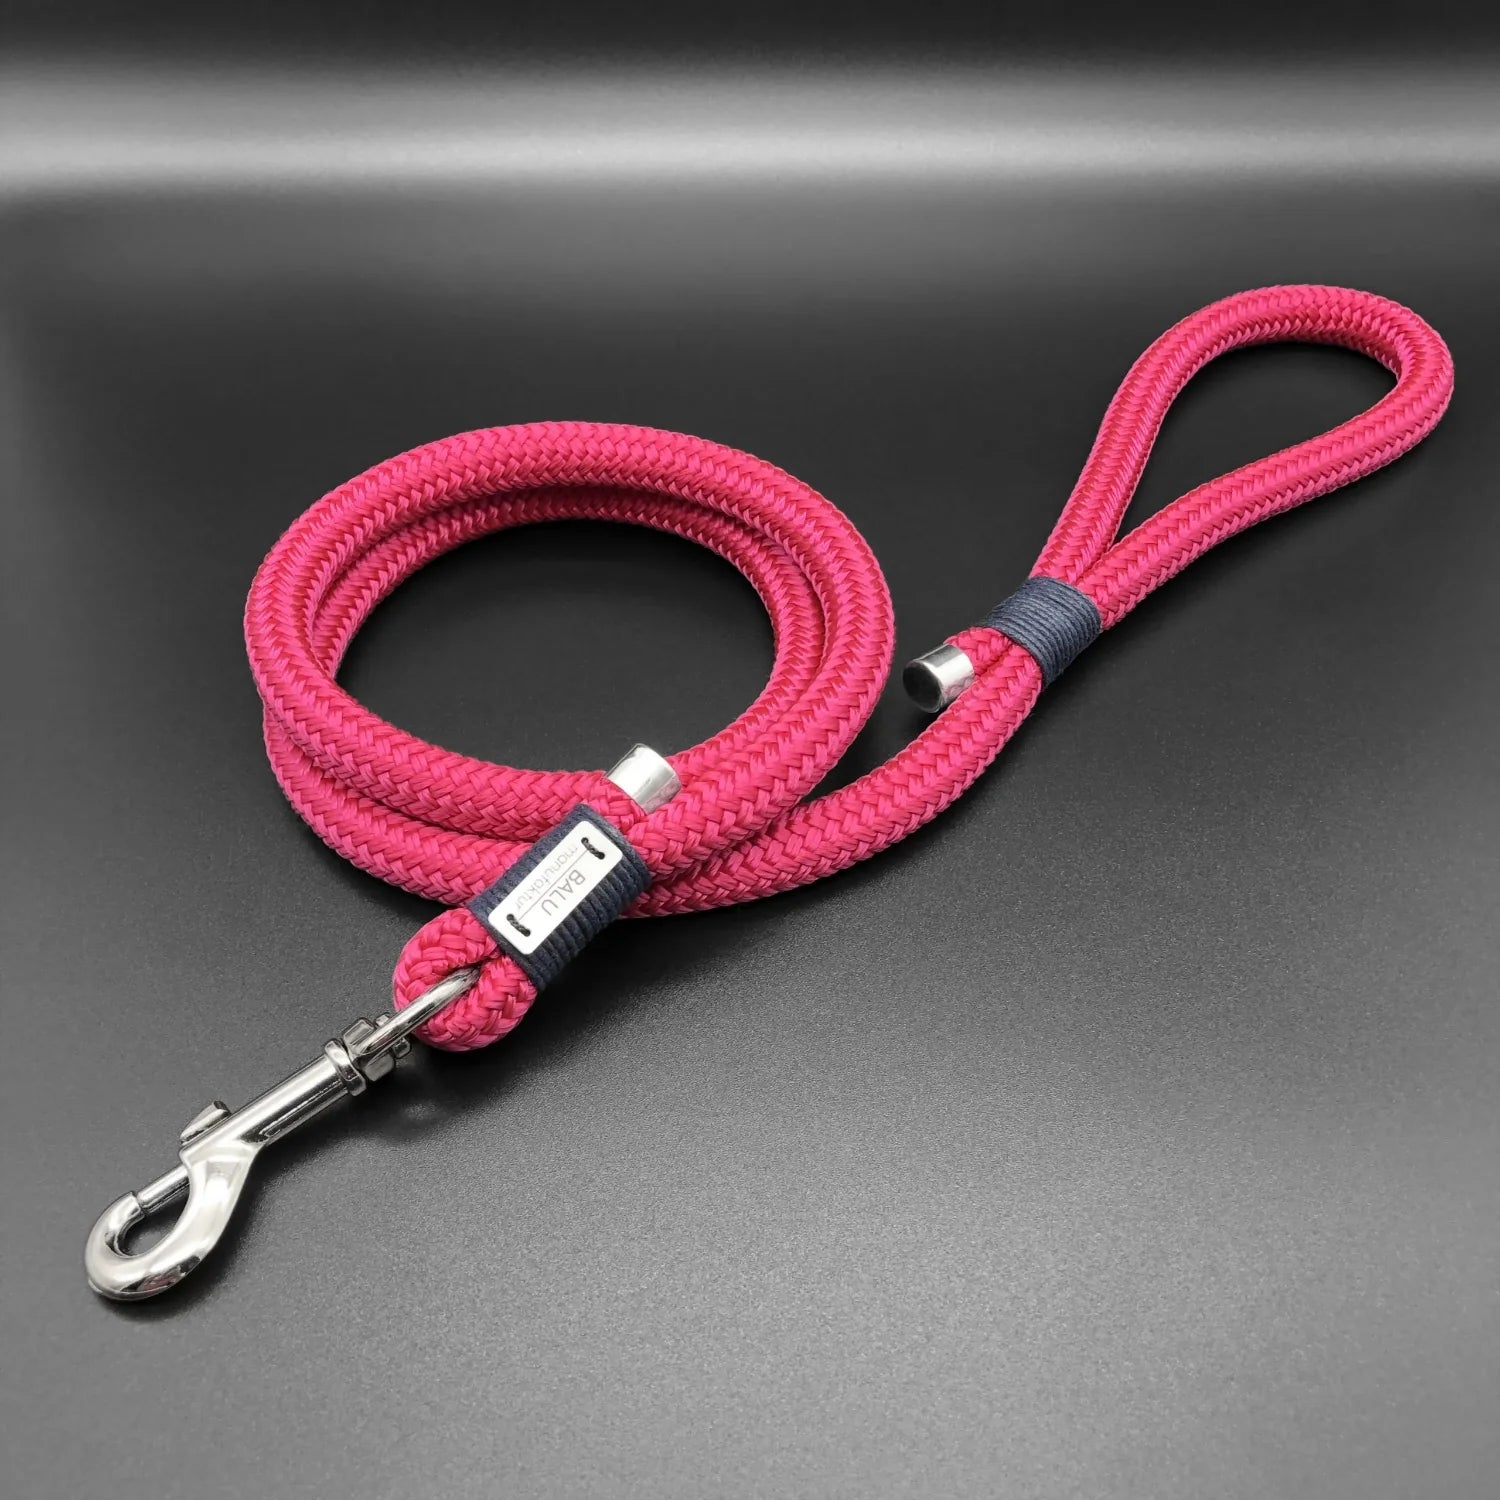 Hundeleine aus Seil 2m pink BALU manufaktur